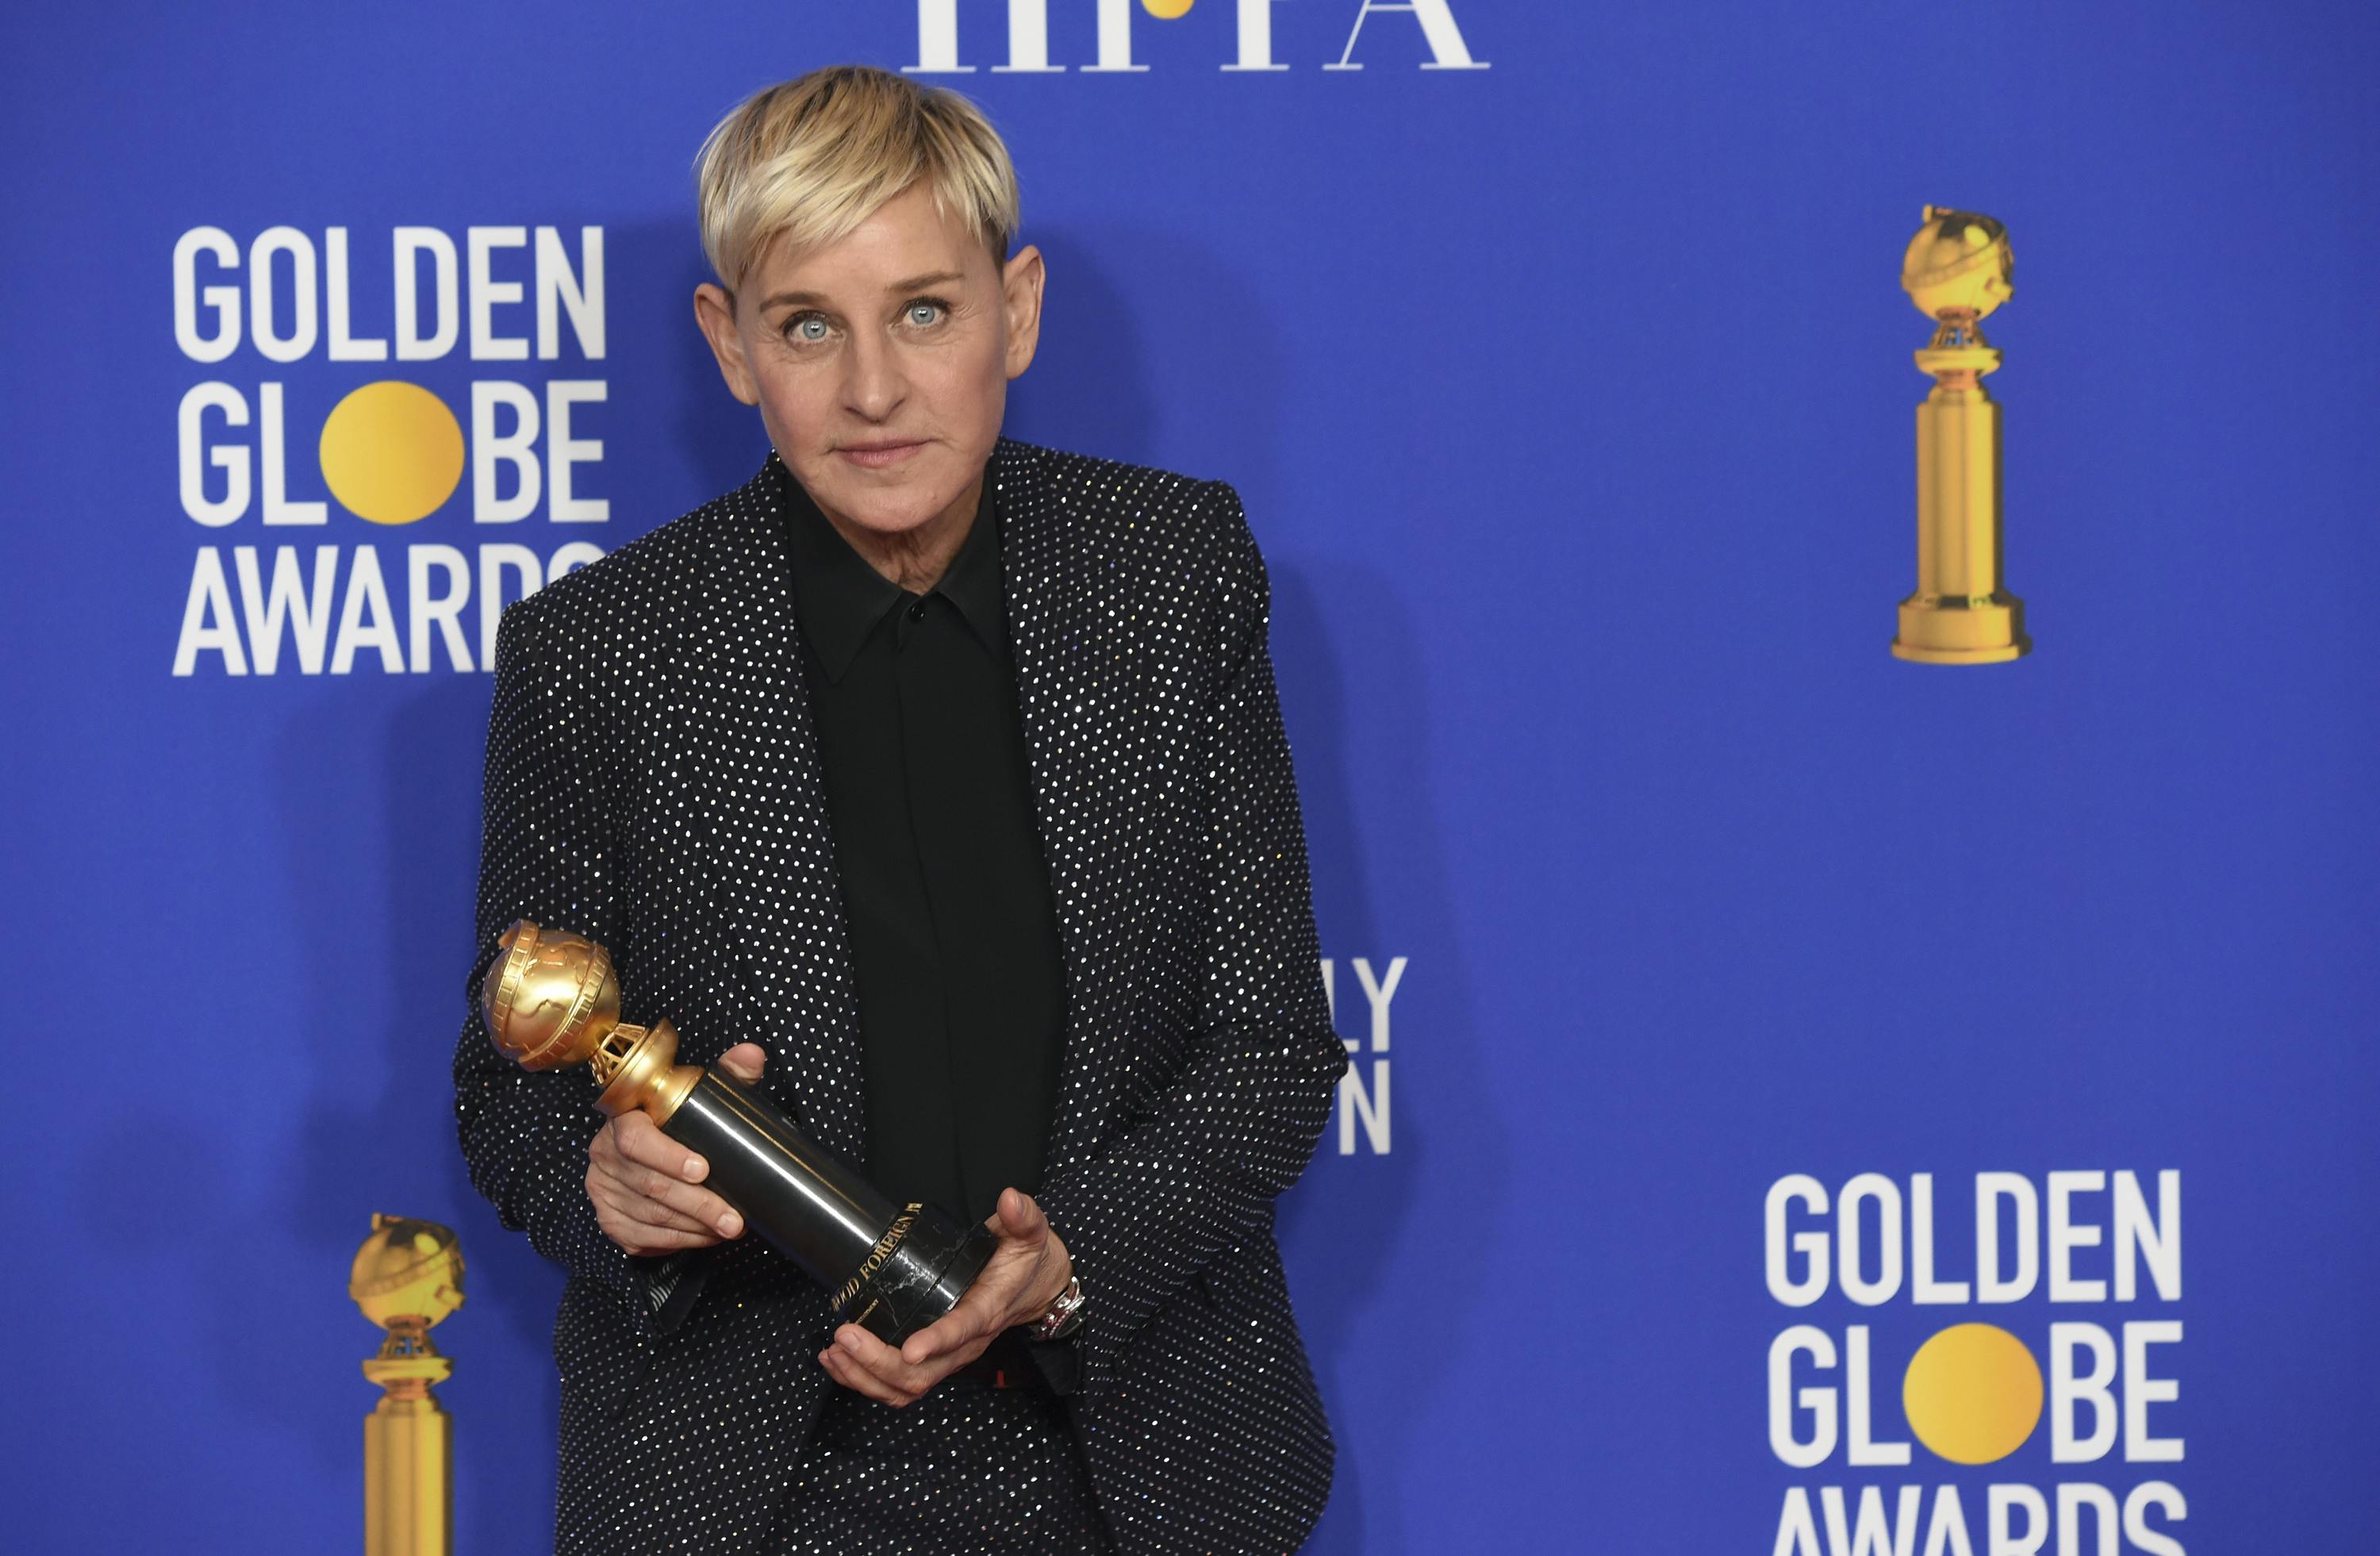 Ellen DeGeneres, winner of the Carol Burnett award, poses in the press room at the 77th annual Golden Globe Awards at the Beverly Hilton Hotel on Sunday, Jan. 5, 2020, in Beverly Hills, Calif. (AP Photo/Chris Pizzello)